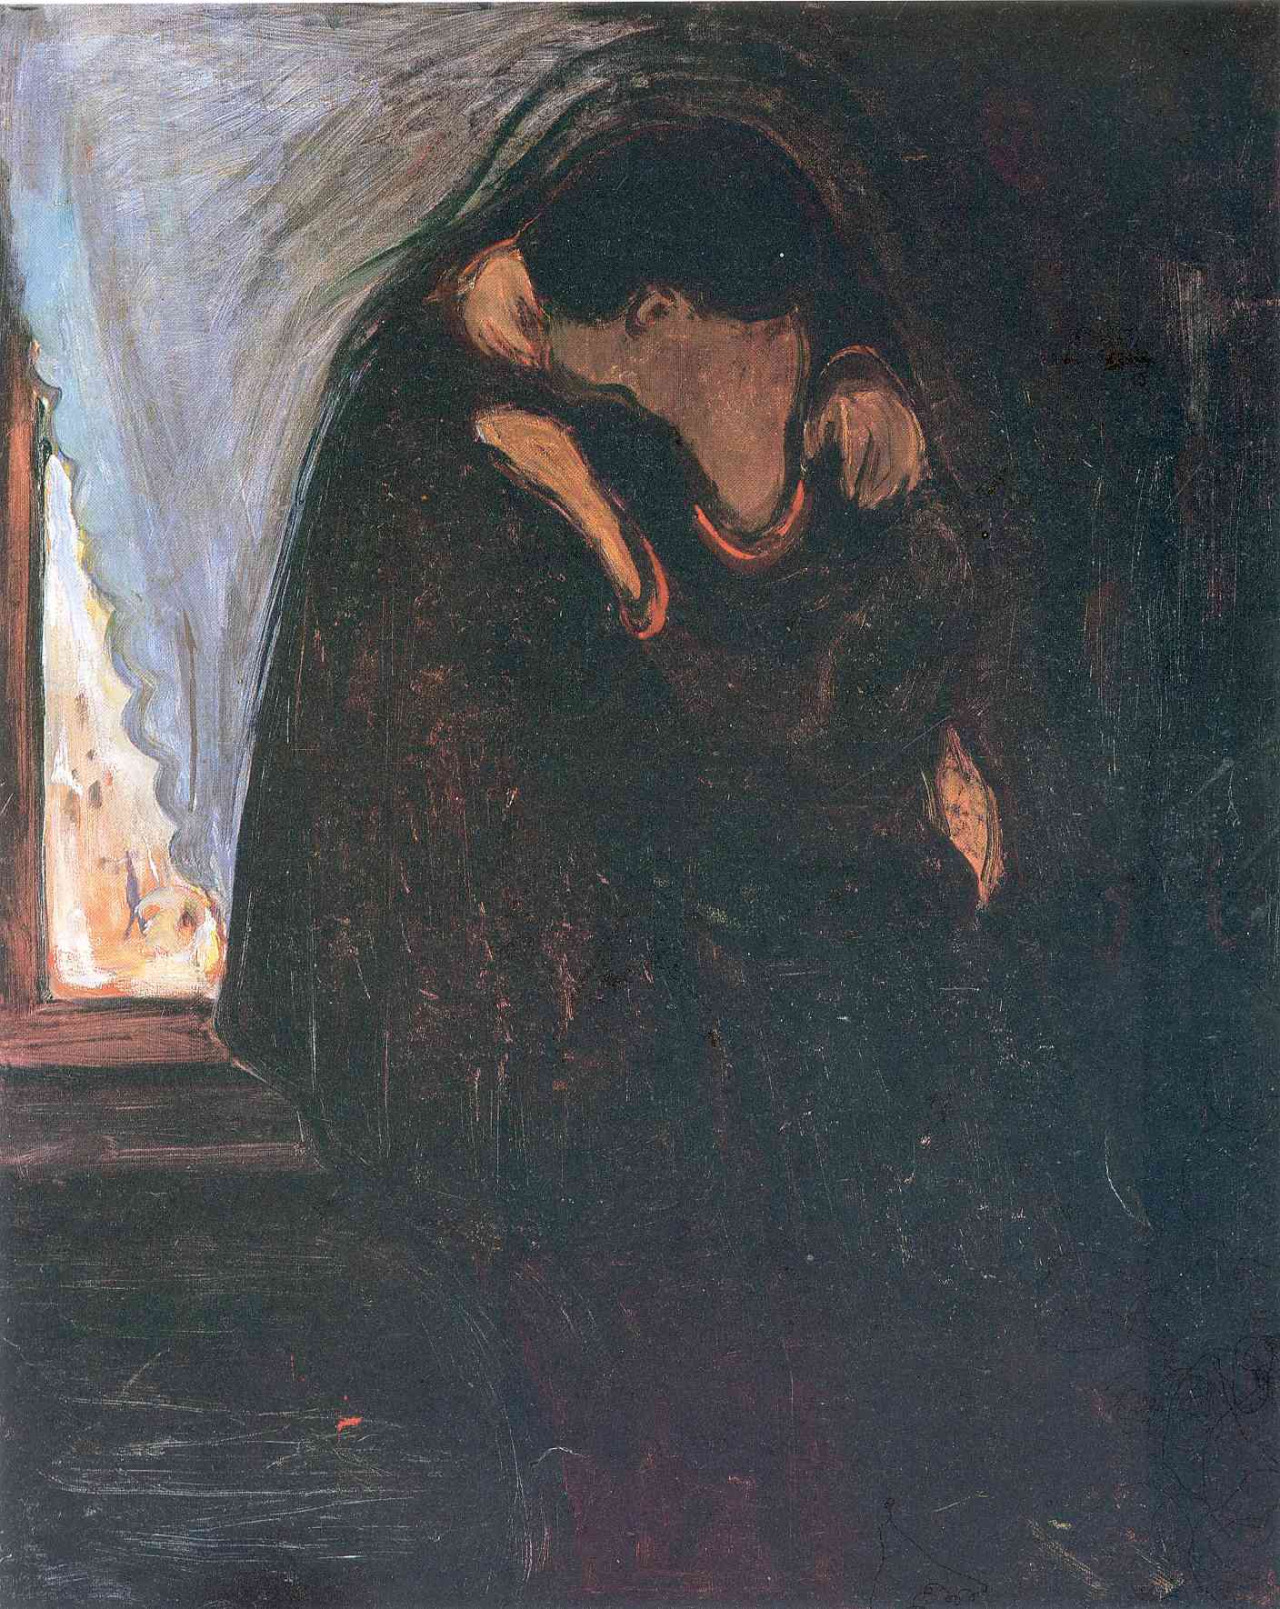 The Kiss, Edvard Munch